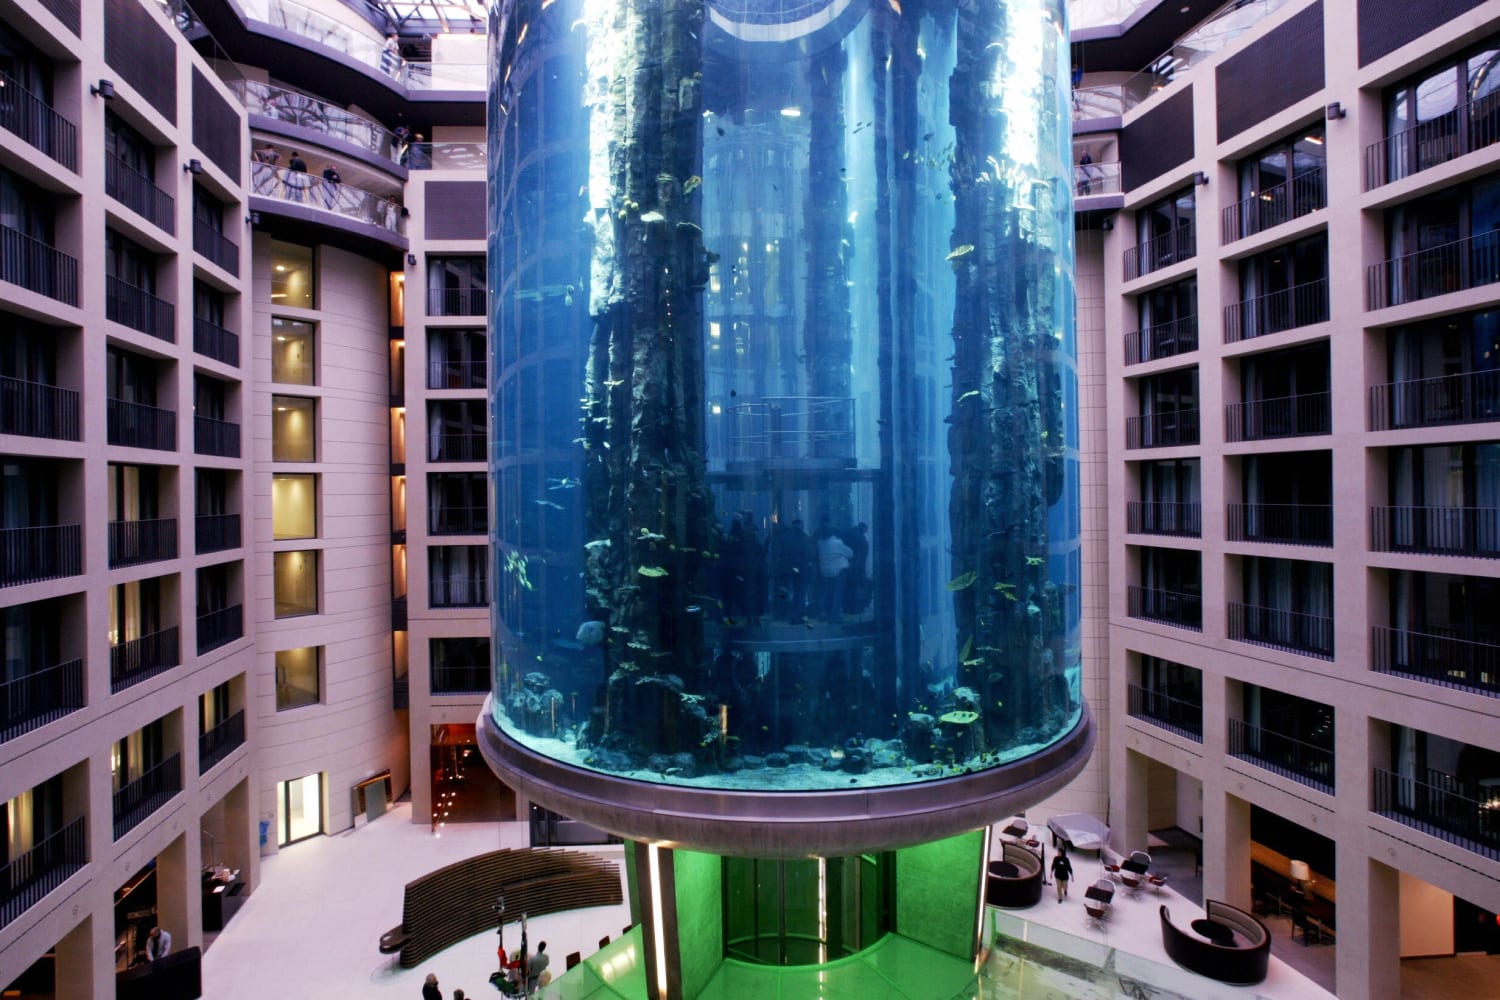 Huge Berlin aquarium bursts, releasing floods of water and tropical fish